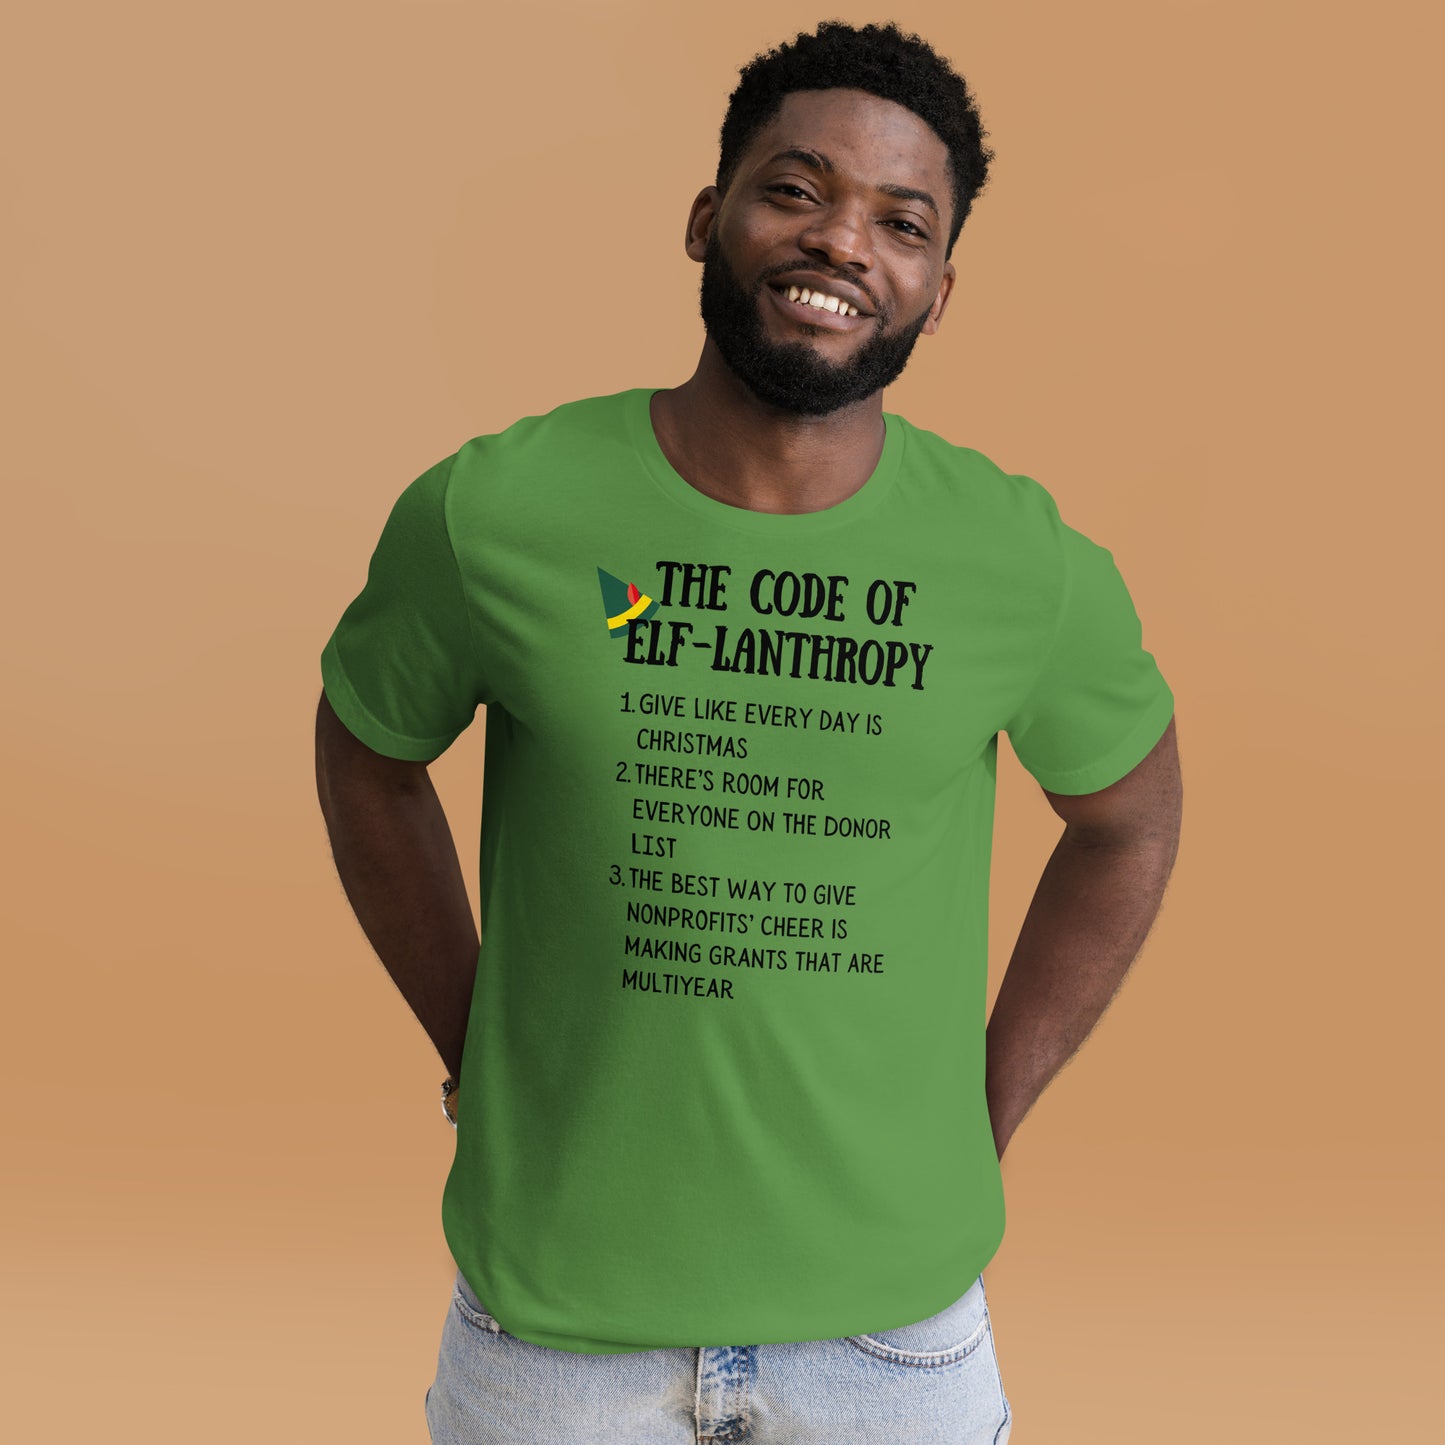 Code of Elf-lanthropy light Unisex t-shirt